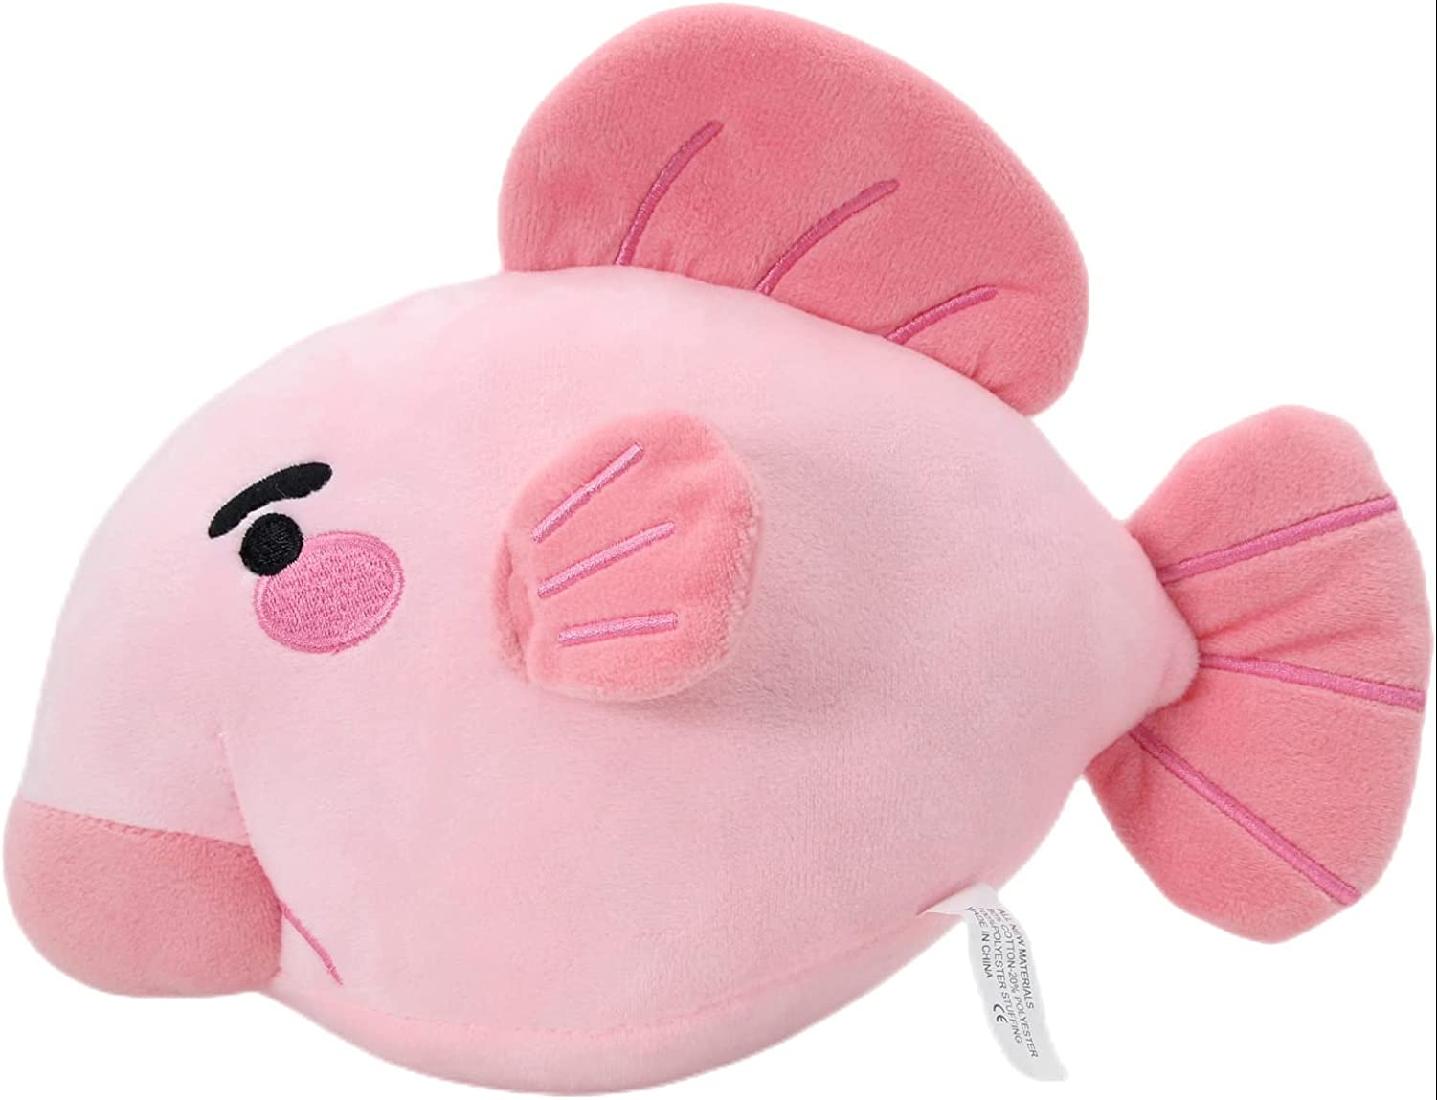 Blobfish Plush Pillow Cute Ugly Fish Blobfish Stuffed Animal - Blob Fish  Plushie